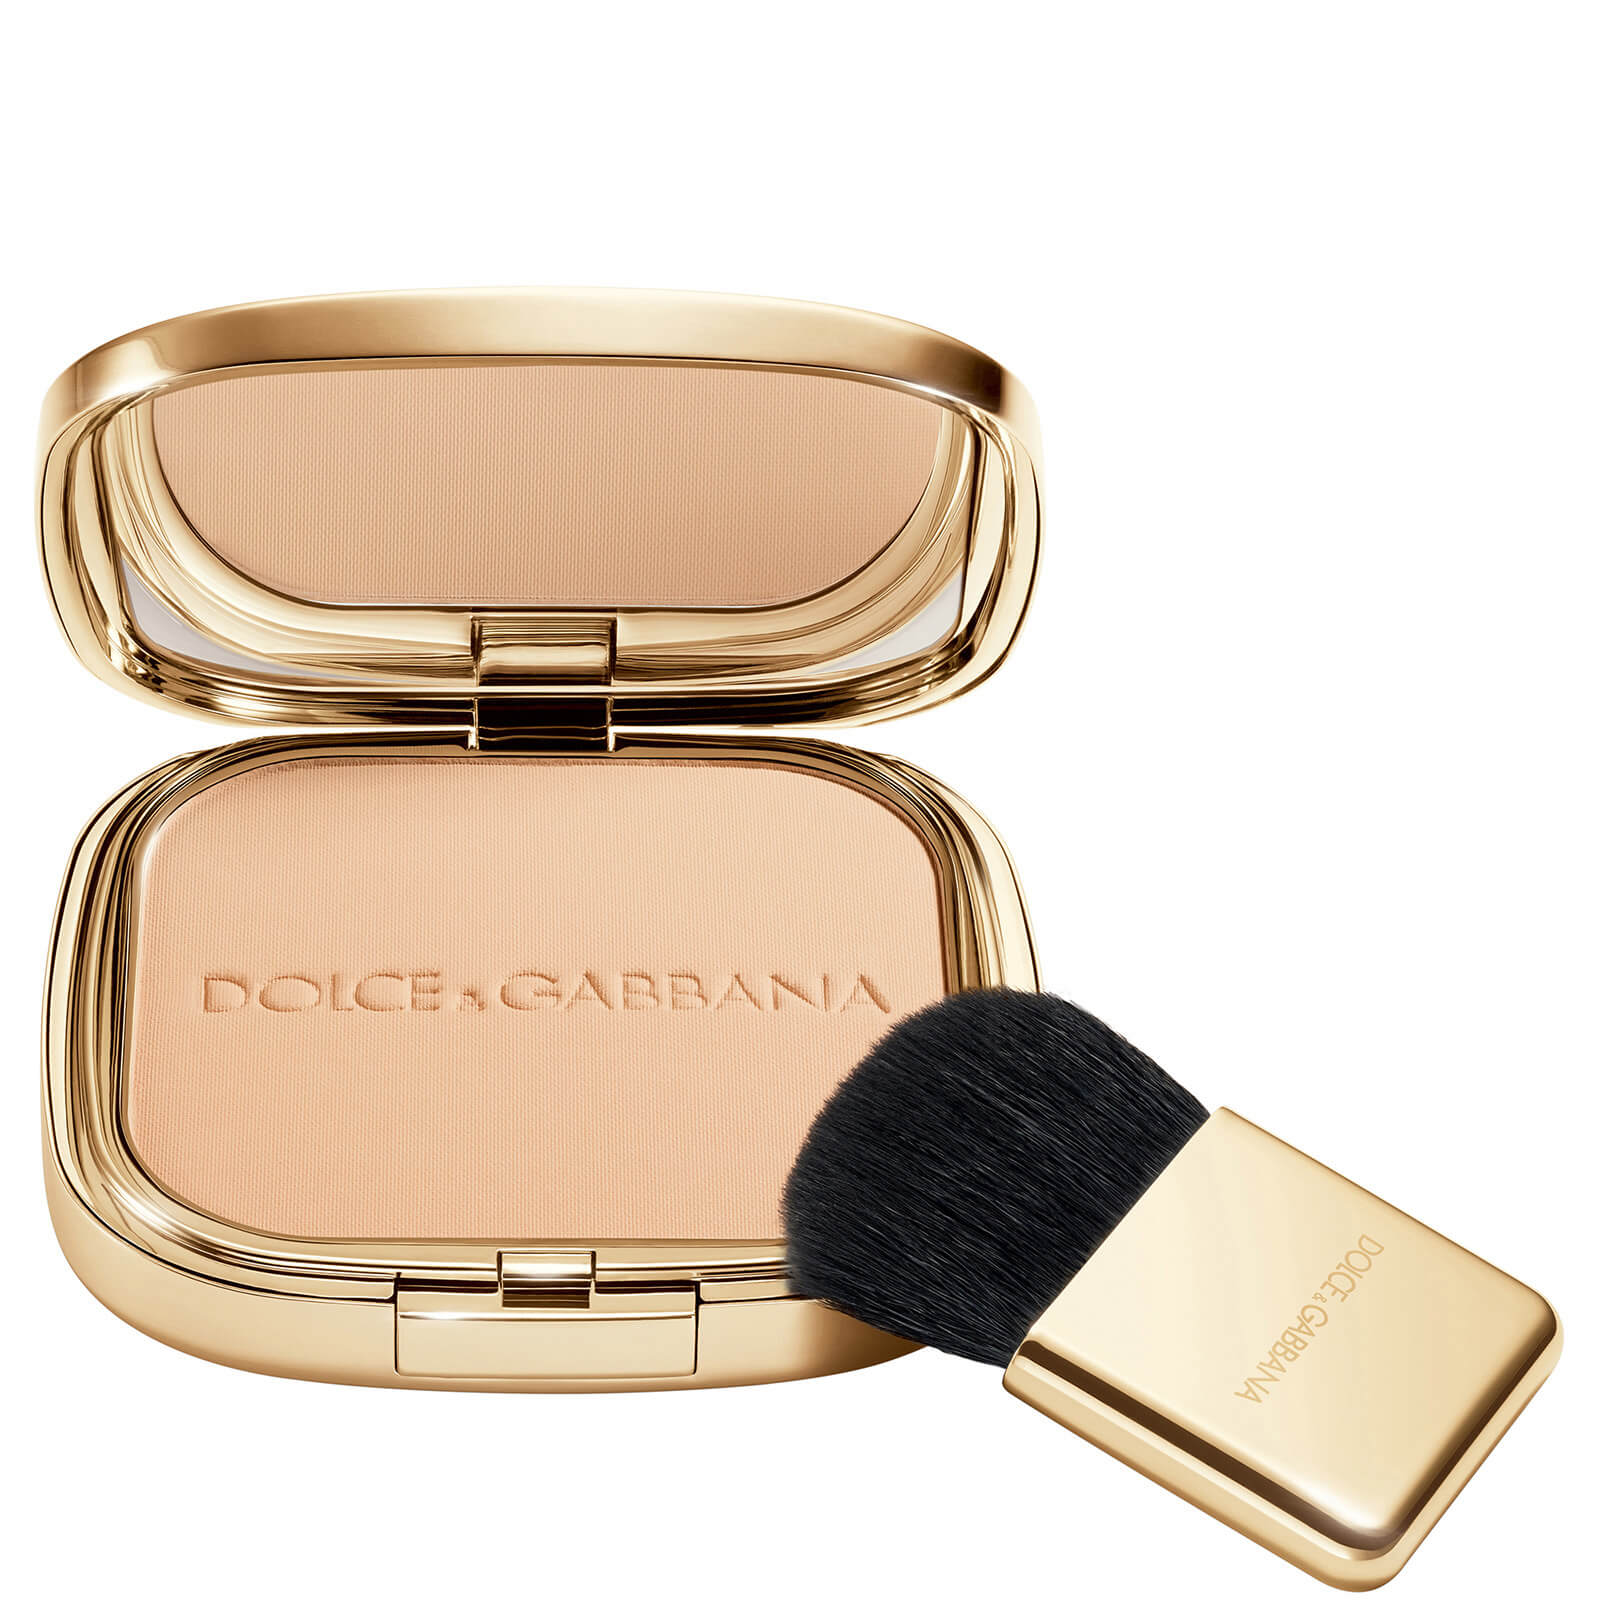 Dolce&Gabbana Perfection Veil Pressed Powder 15g (Various Shades) - 2 Natural Glow